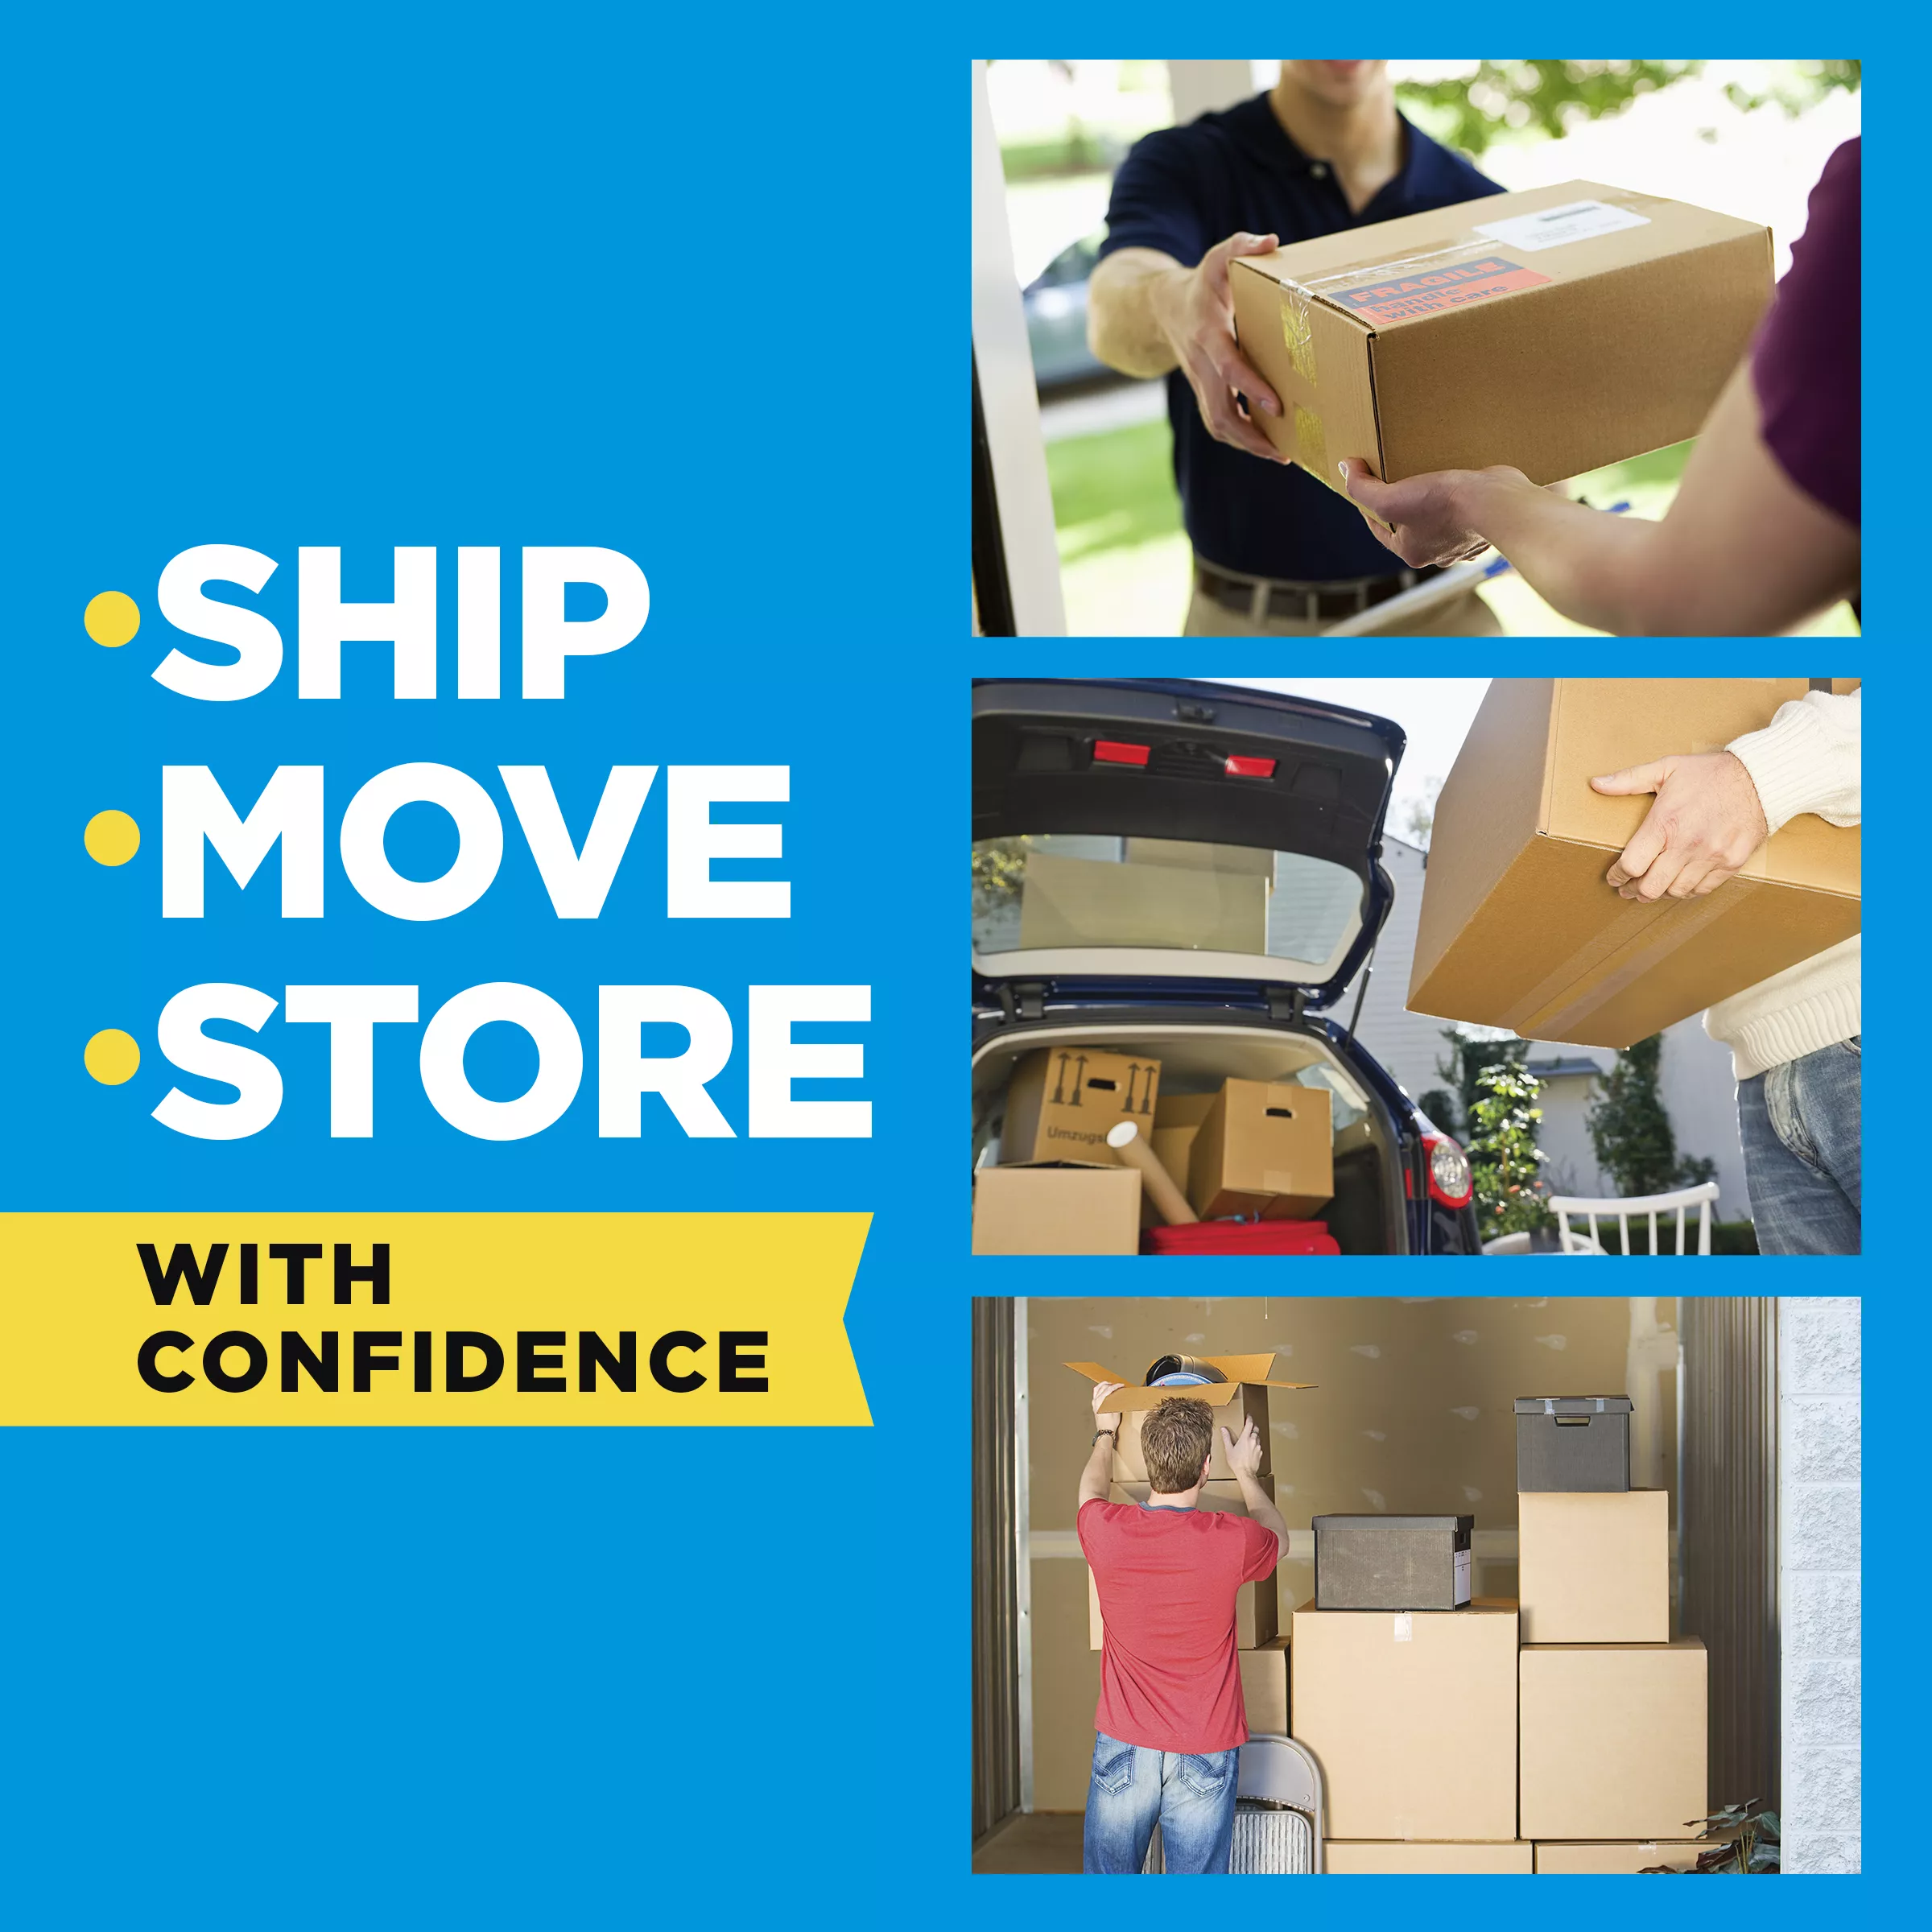 SKU 7100159330 | Scotch® Heavy Duty Shipping Packaging Tape